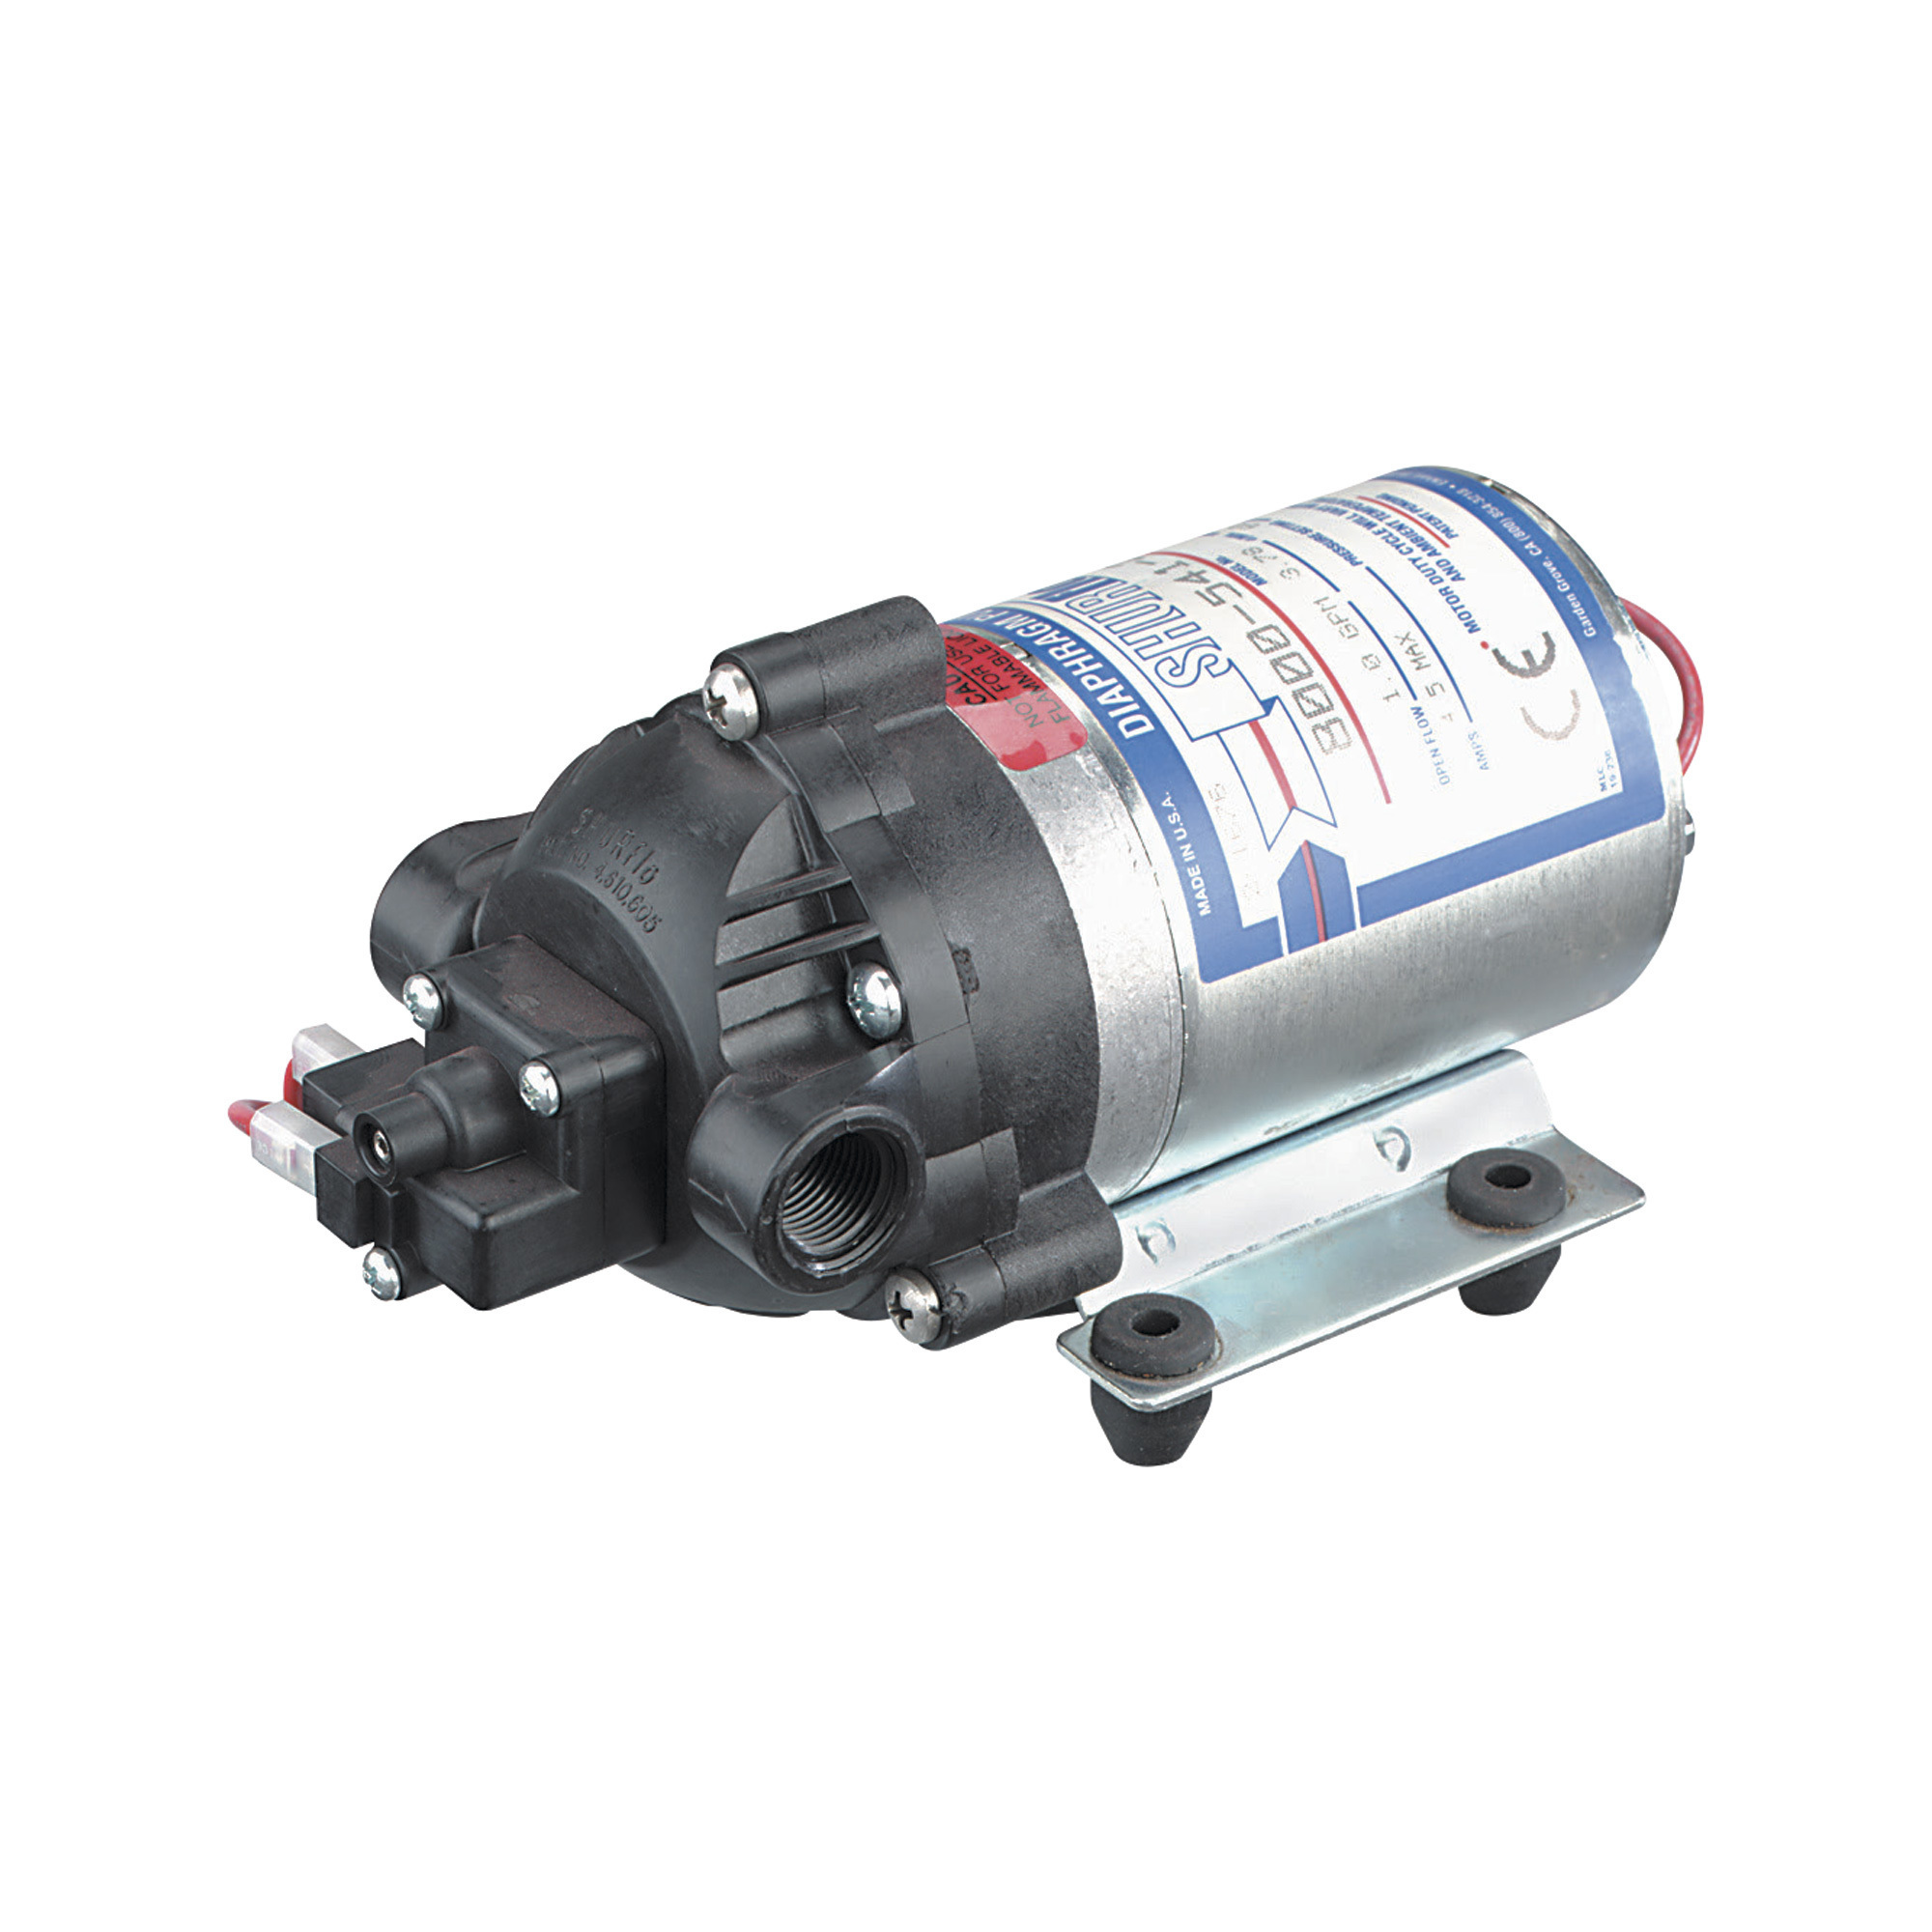 SHURflo On-Demand Sprayer Diaphragm Pump â 1 GPM, 60 PSI, 12 Volt, Model 8009-541-236